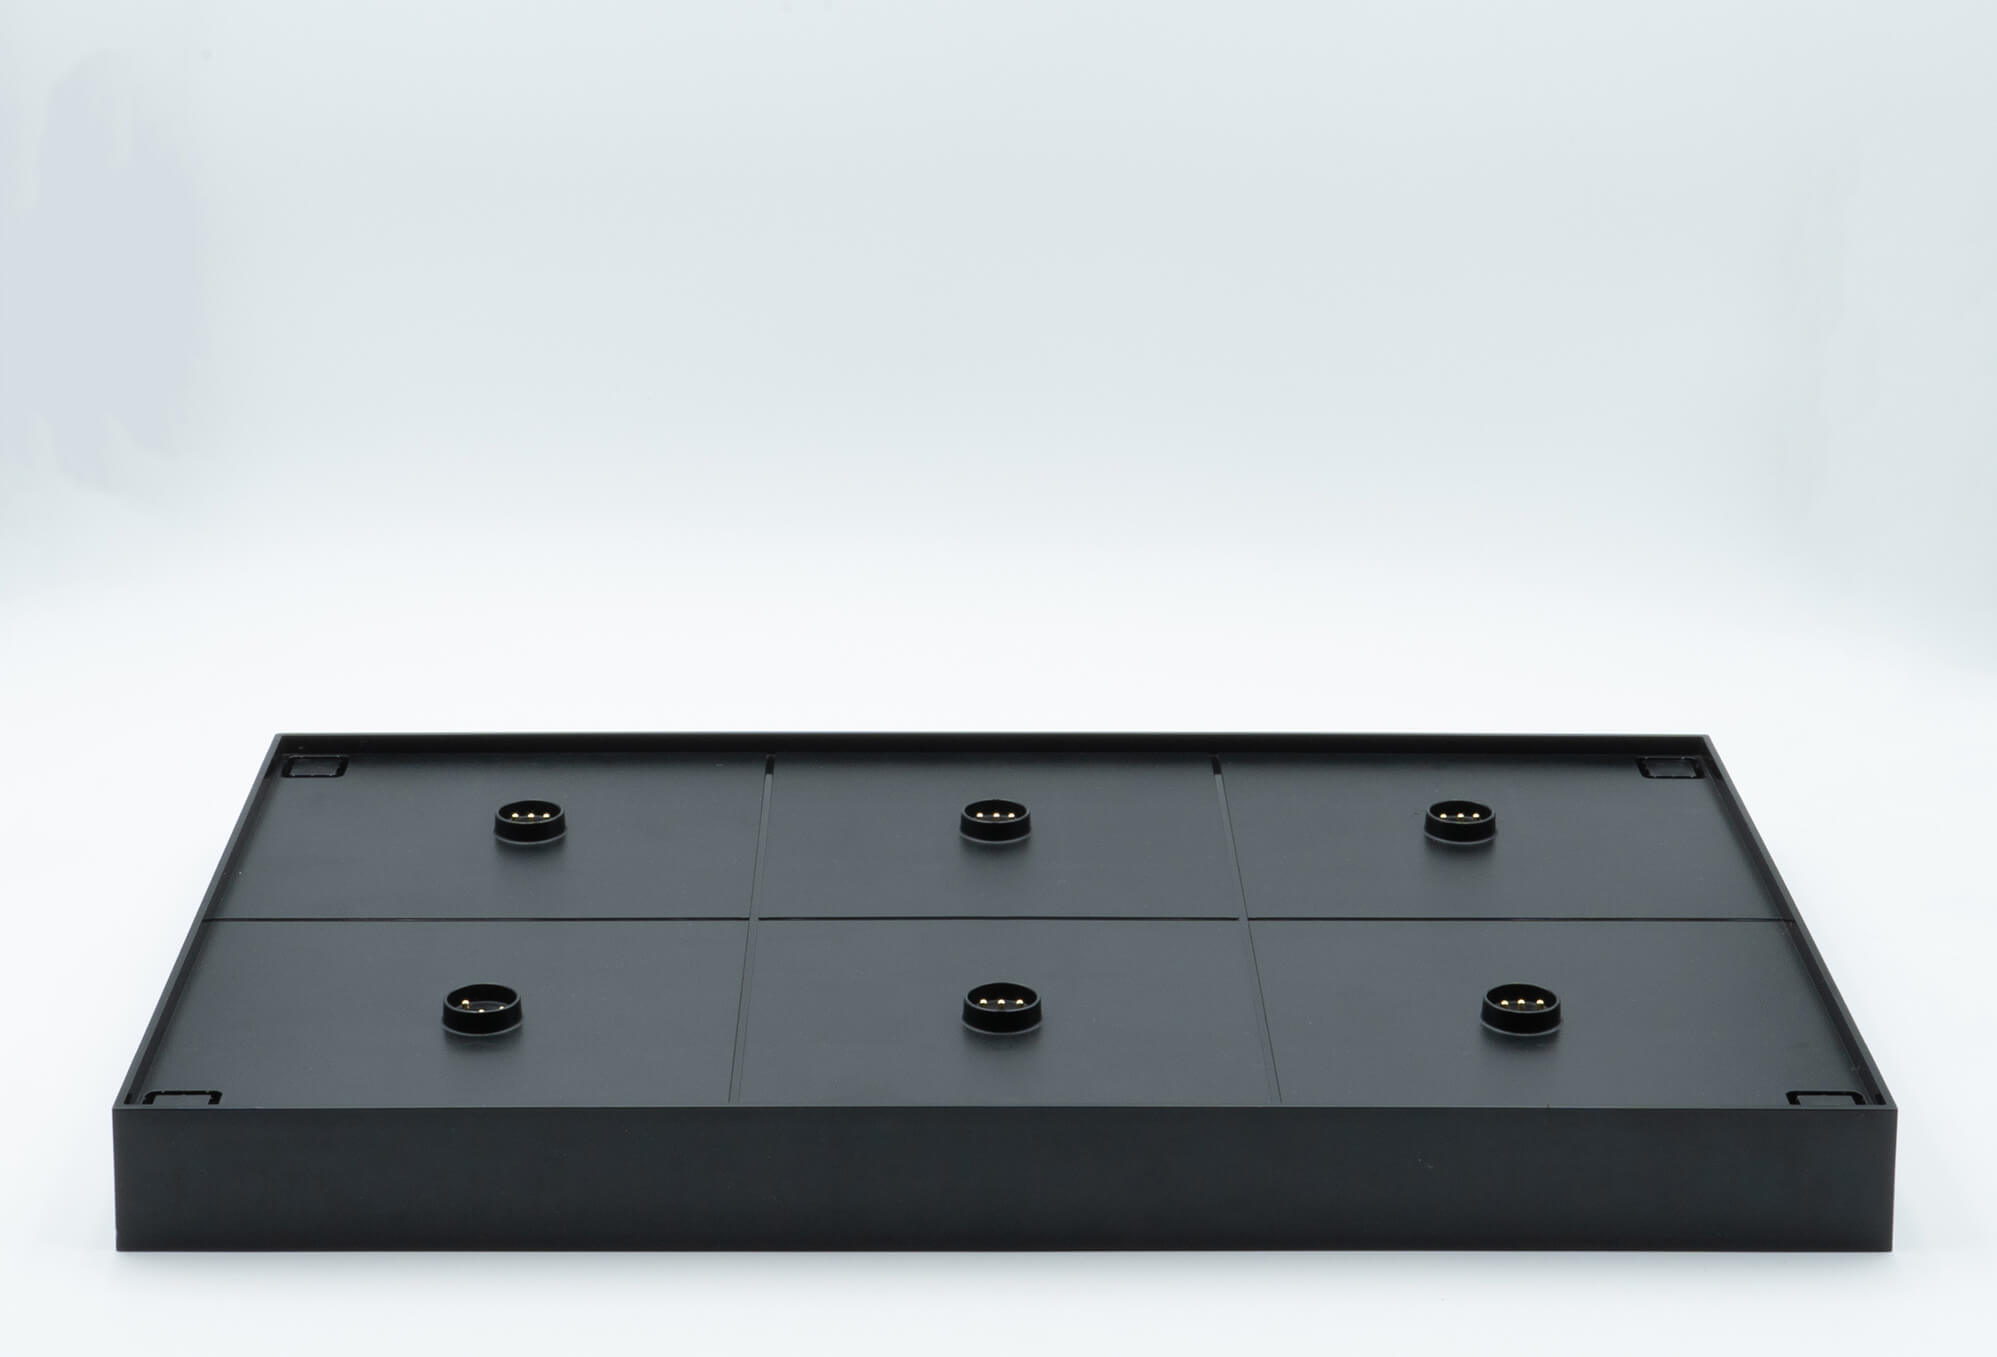 6 x Zafferano Olivia Pro Mini - Corten / Rust + Ladestation - Bundle